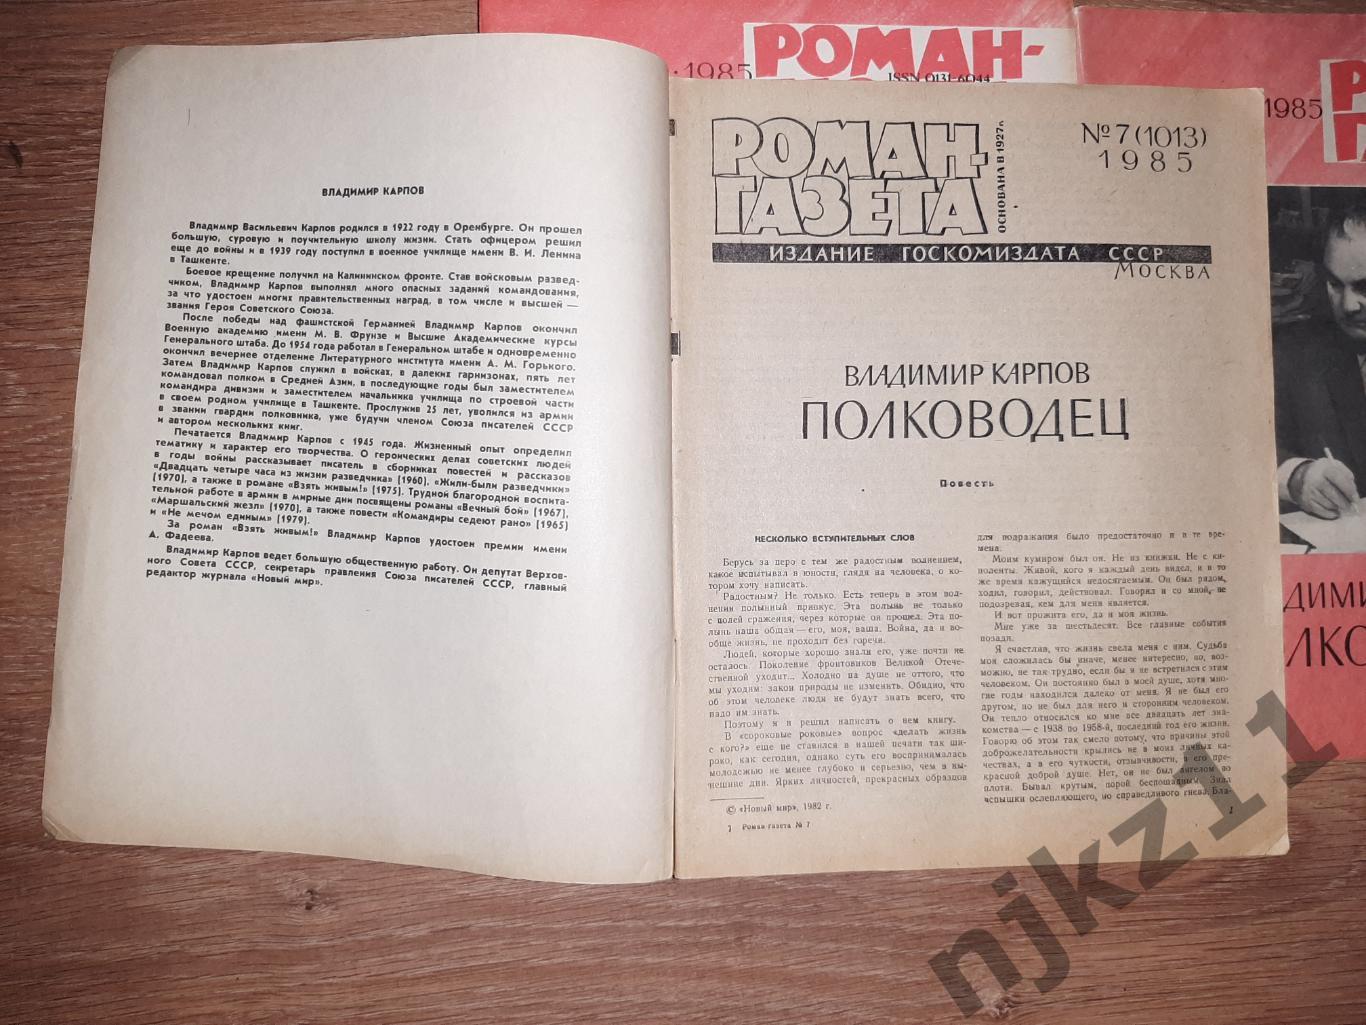 Роман-газета №7, №8, №9, 1985. Владимир Карпов. Полководец 1